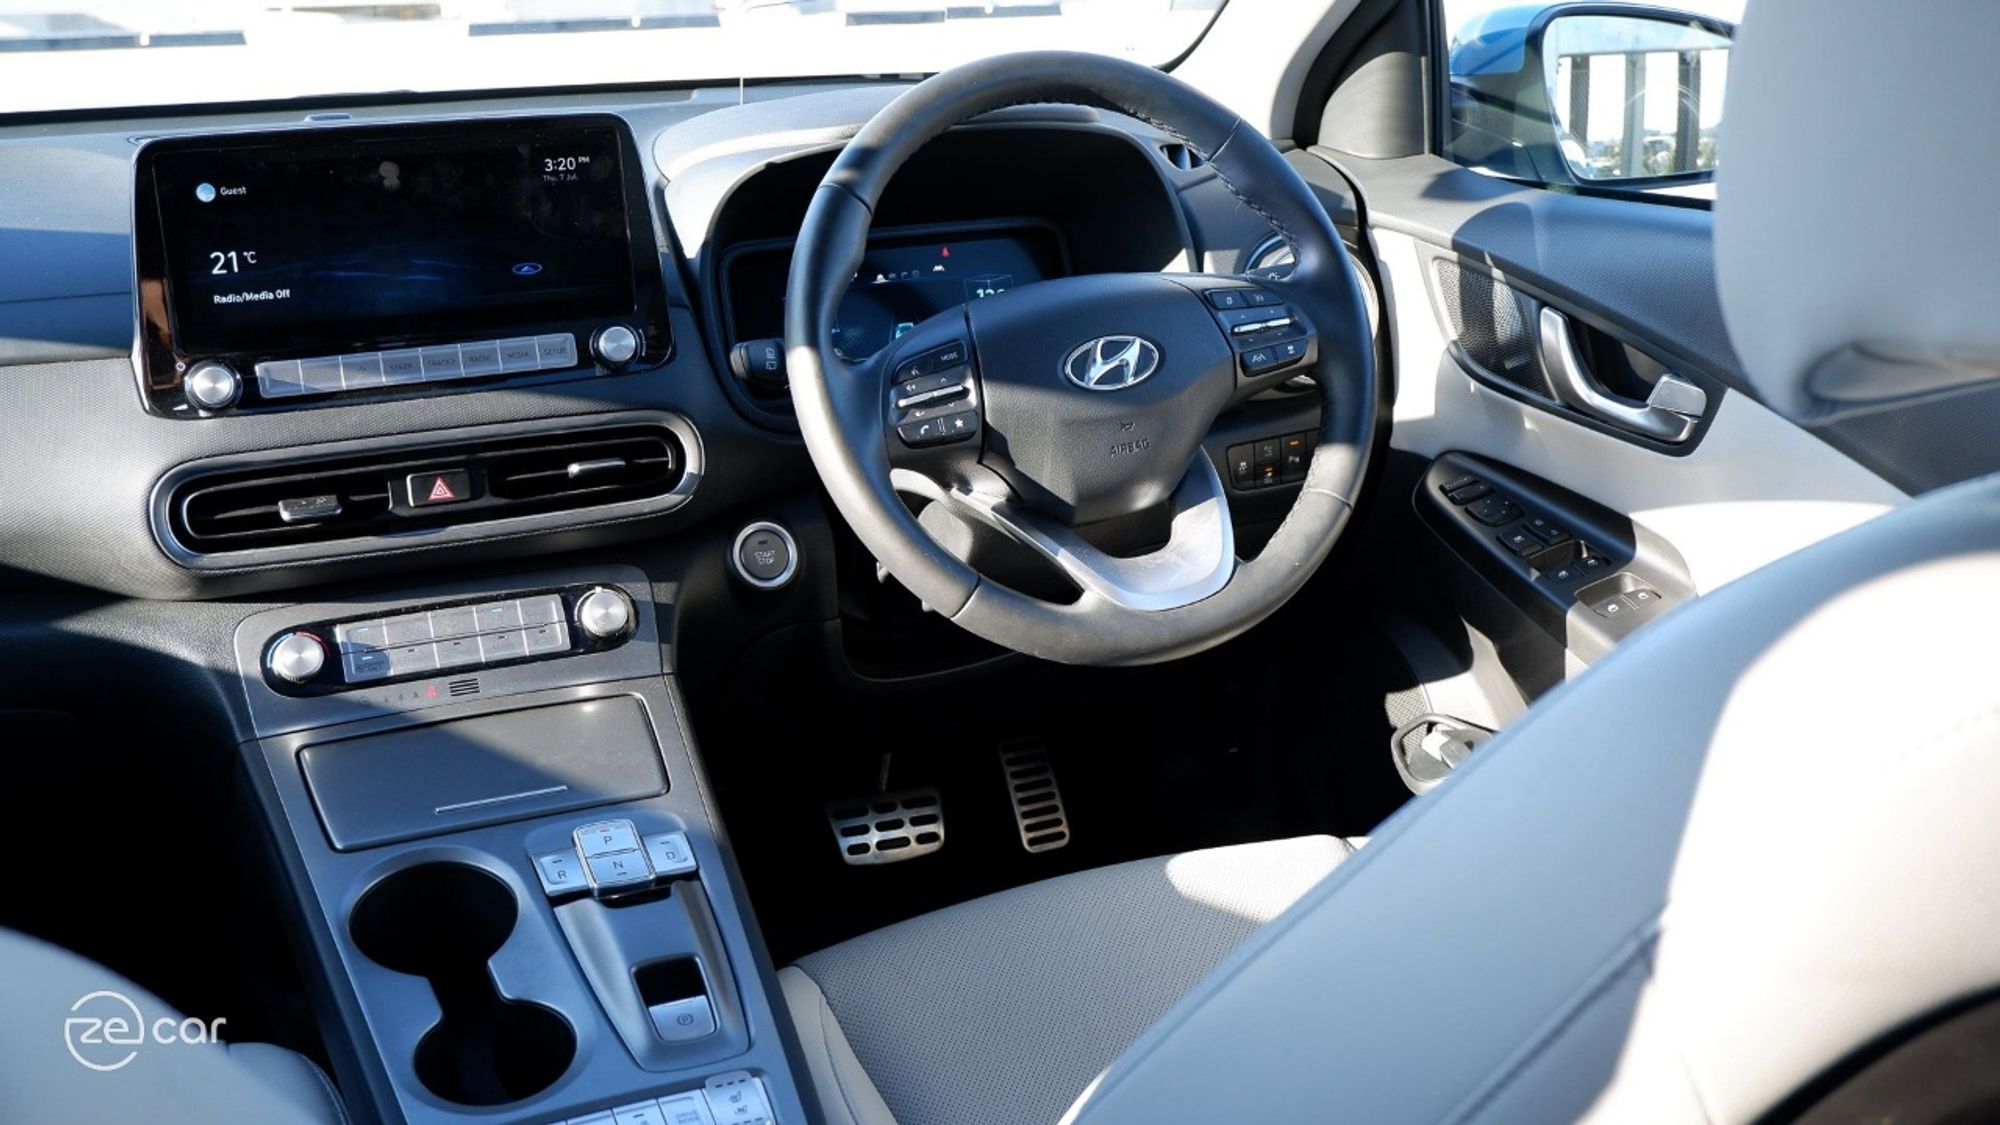 2022 Hyundai Kona Electric Extended Range review, Zecar